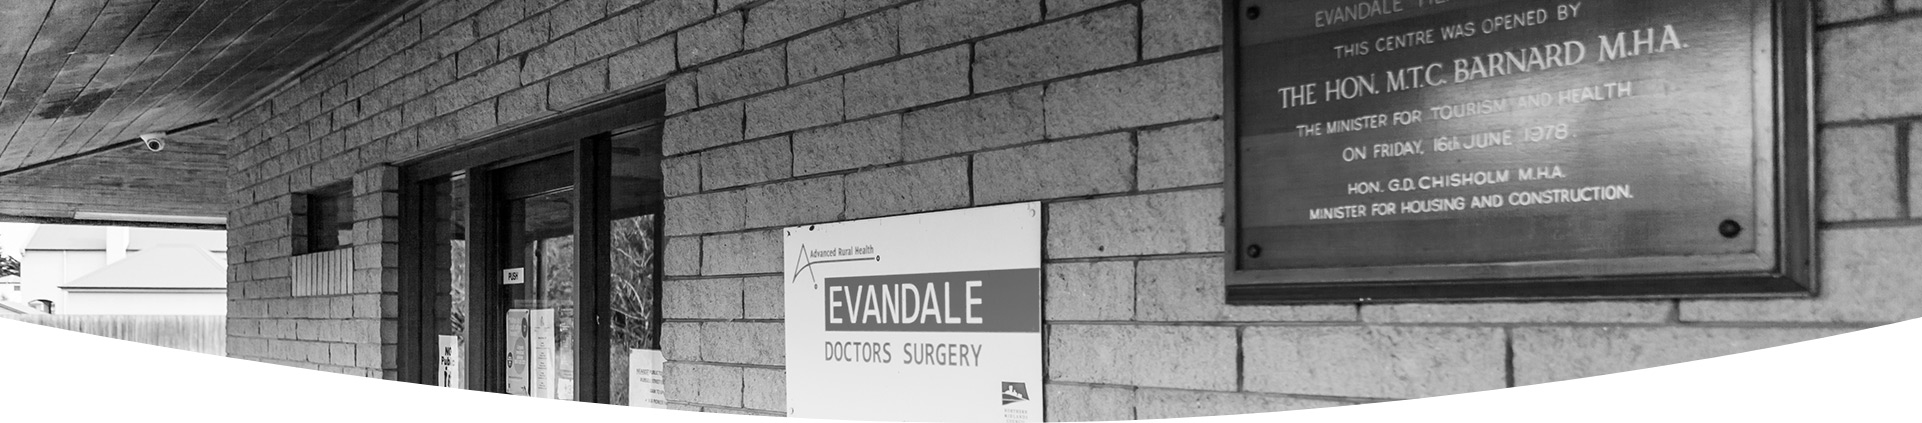 evandale slide 01 - Evandale Doctors Surgery